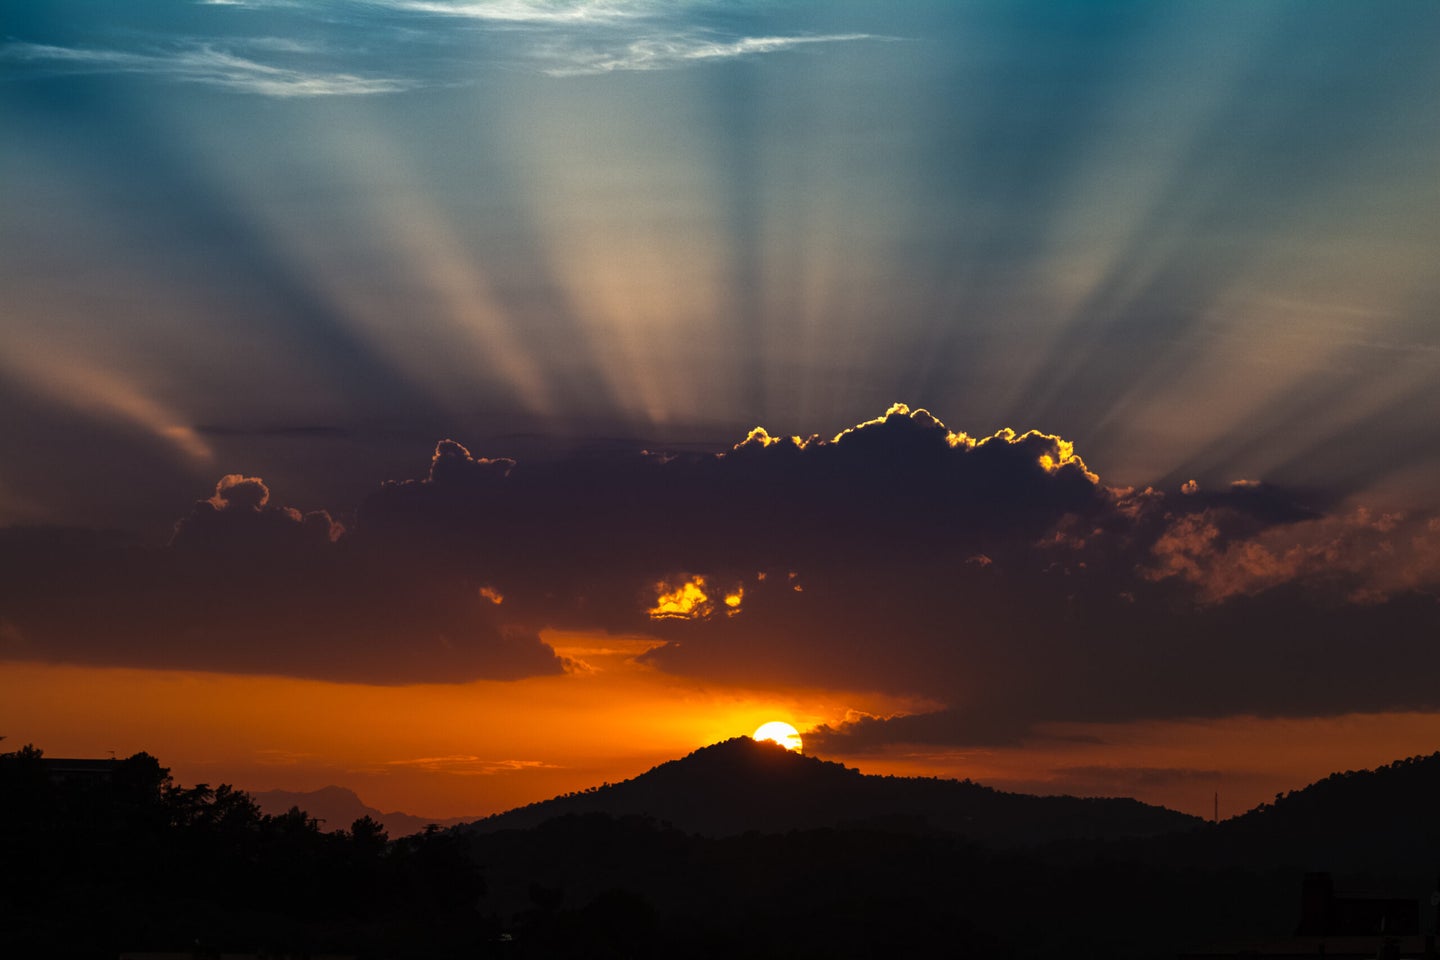 A sun rising over a mountain in Spain.